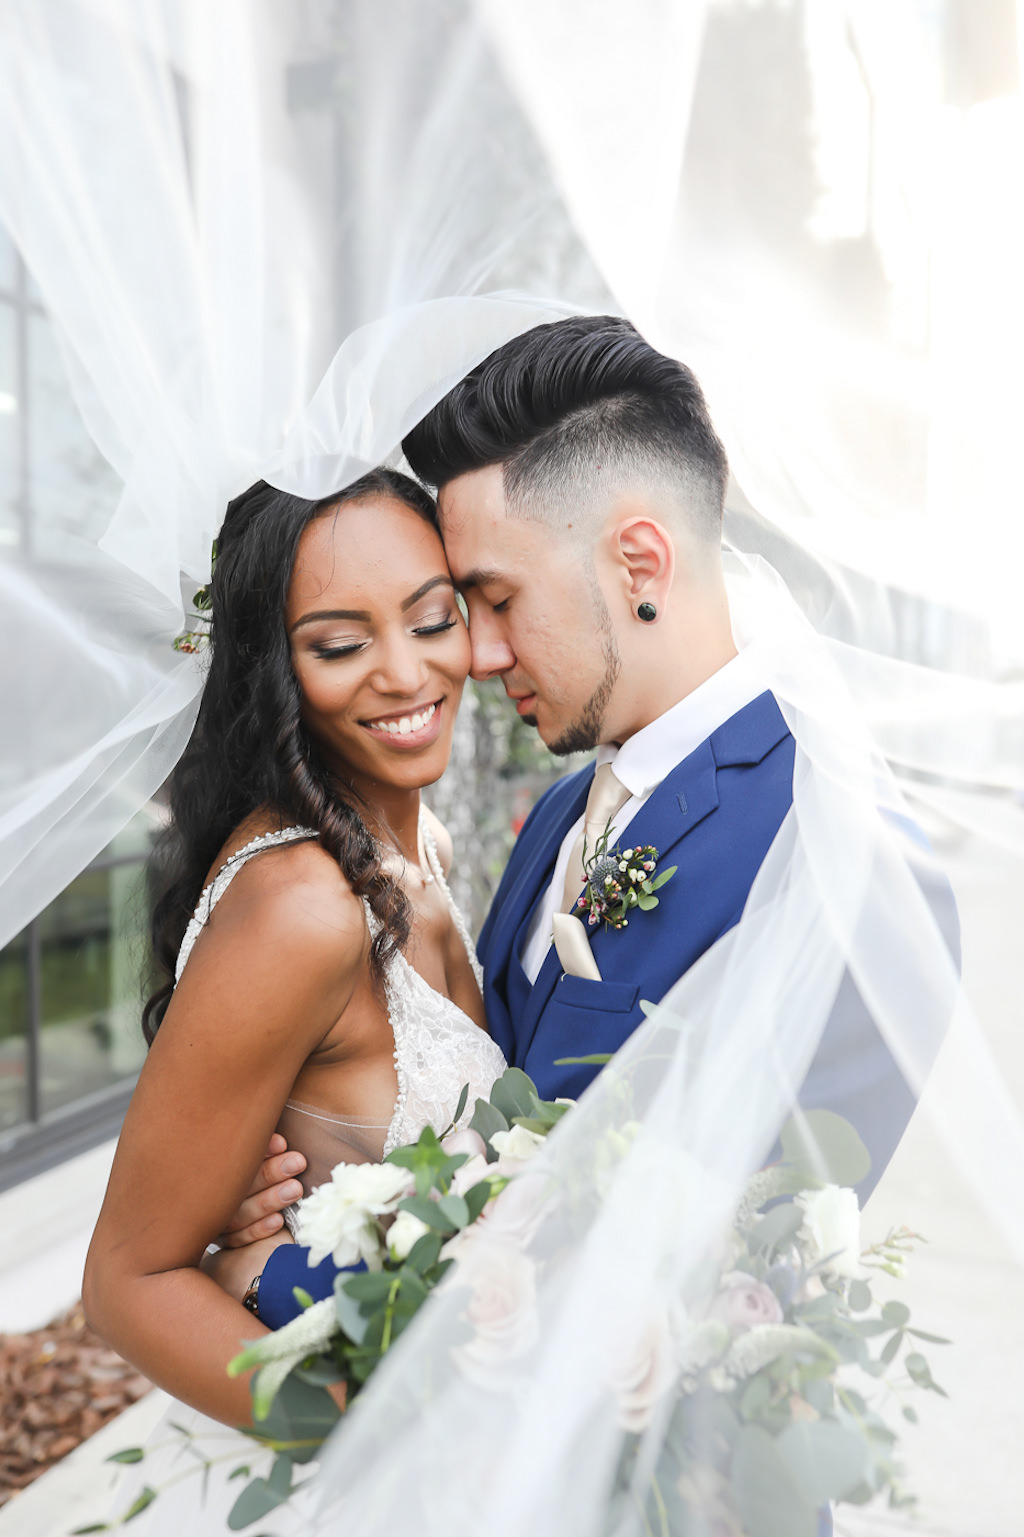 Creative Bride and Groom Veil Blowing in the Wind Wedding Portrait | Tampa Wedding Photographer Lifelong Photography Studio